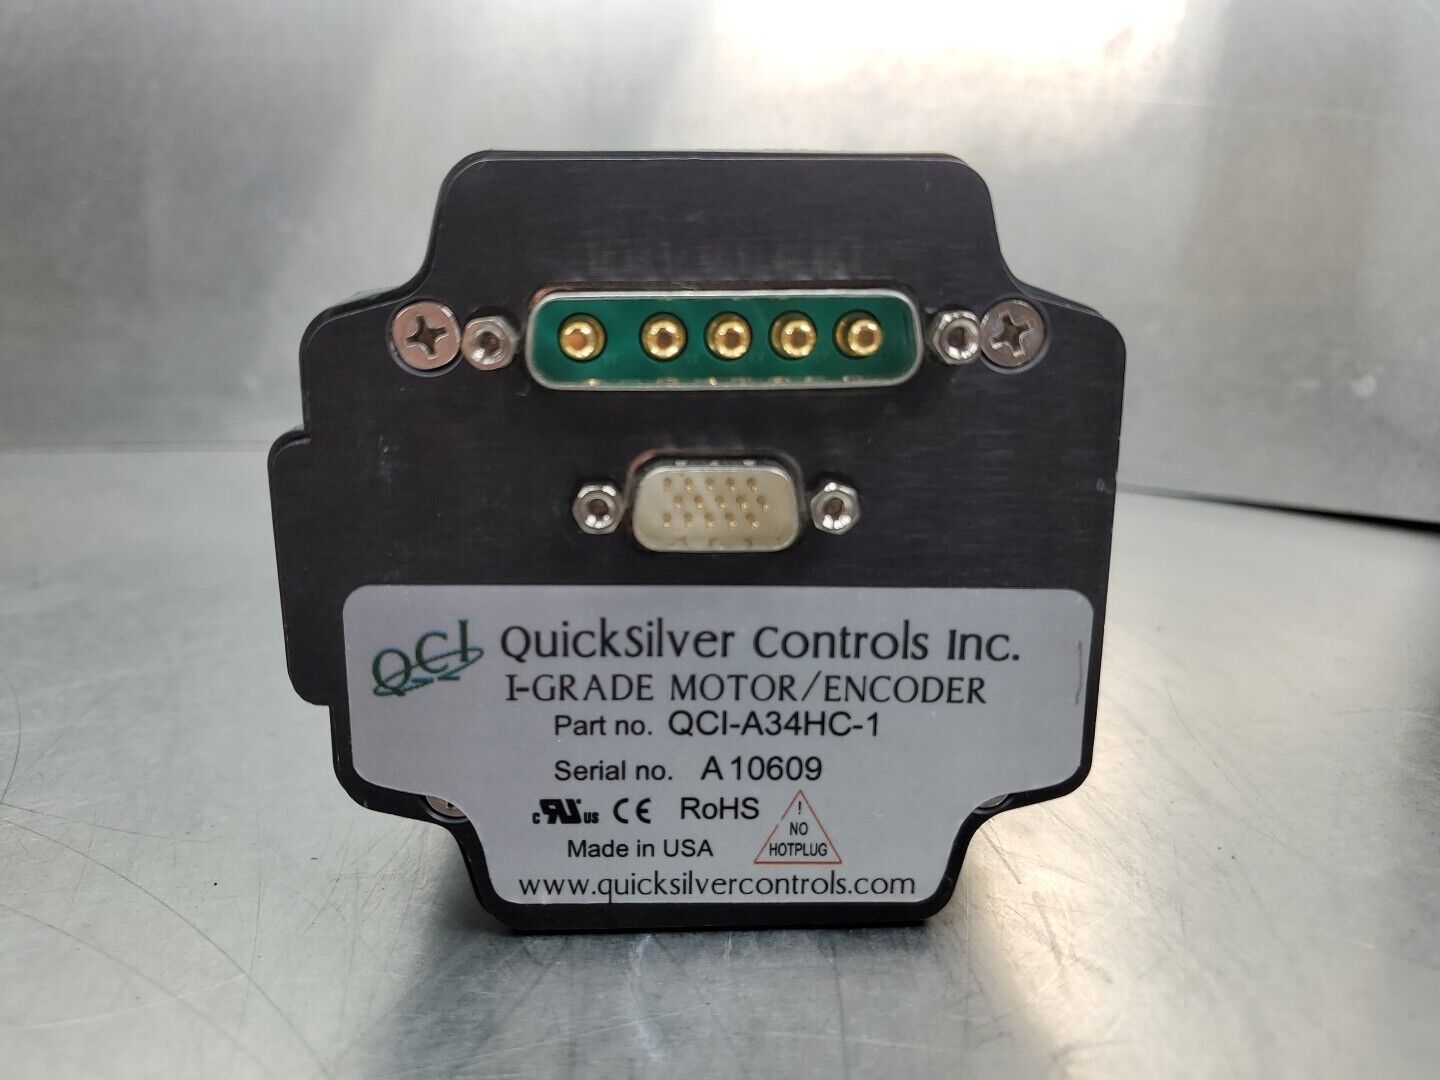 QuickSilver Controls QCI-A34HC-1 I-GRADE Motor/Encoder.                       1E